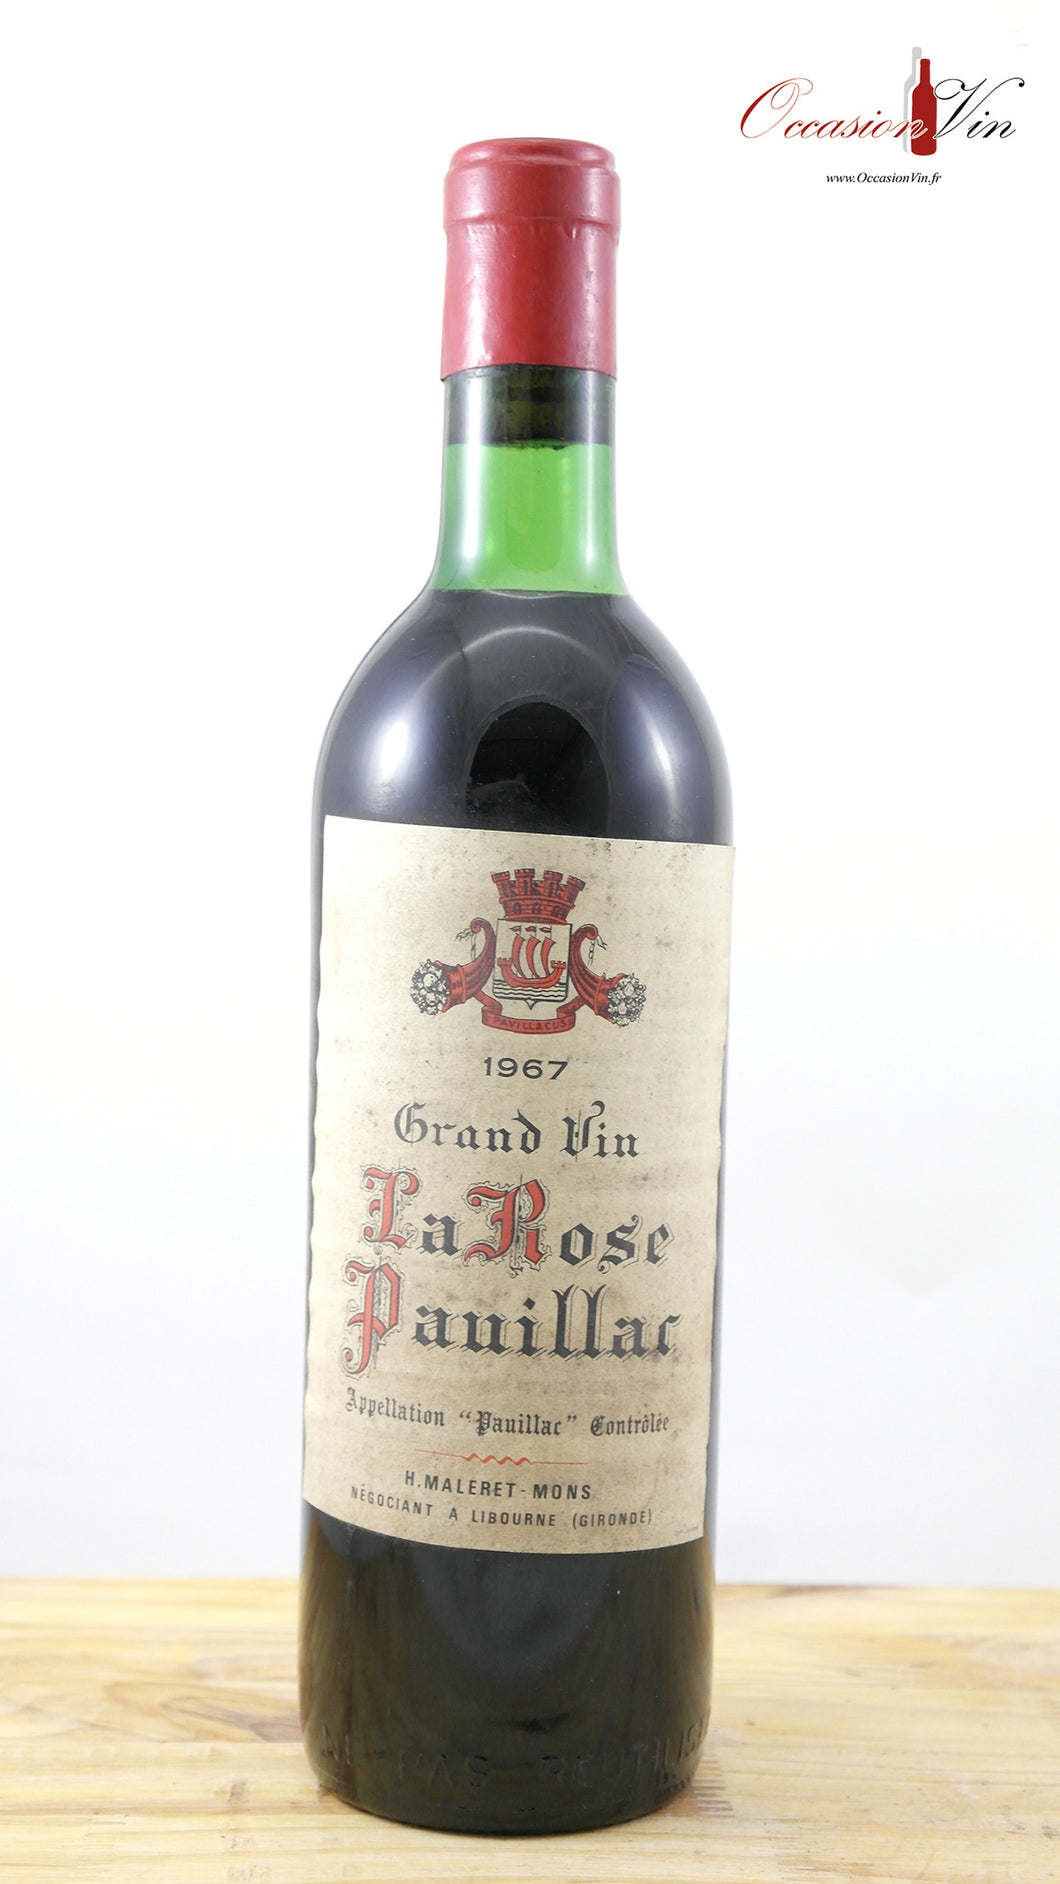 Grand Vin la Rose Pauillac HE Vin 1967